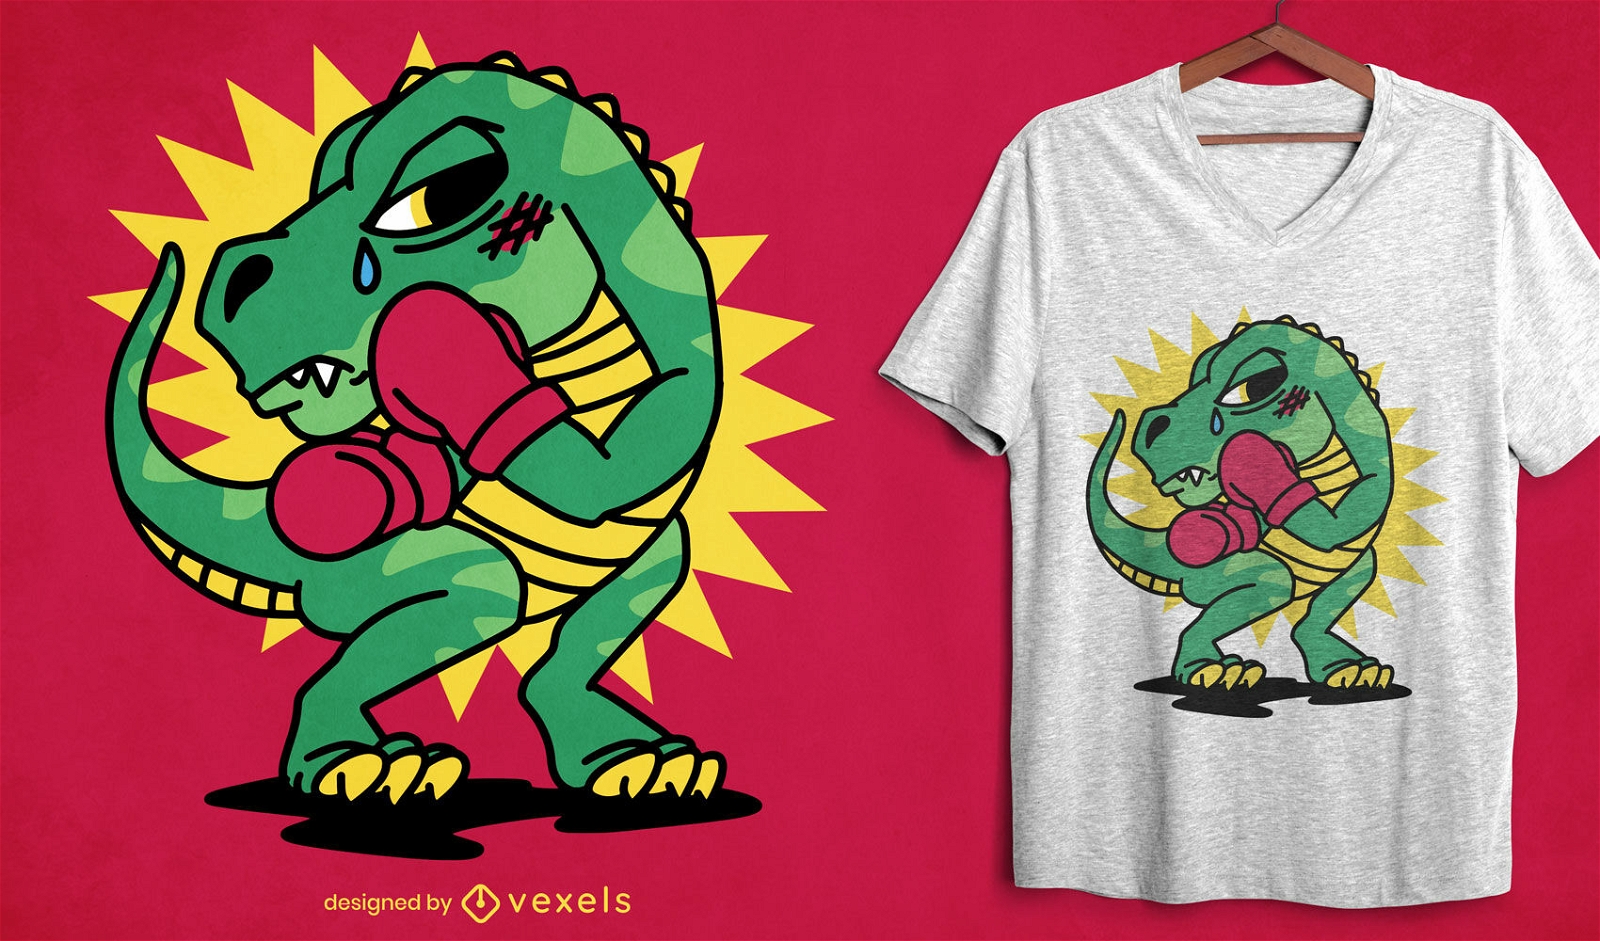 Triste boxeo T-rex diseño de camiseta